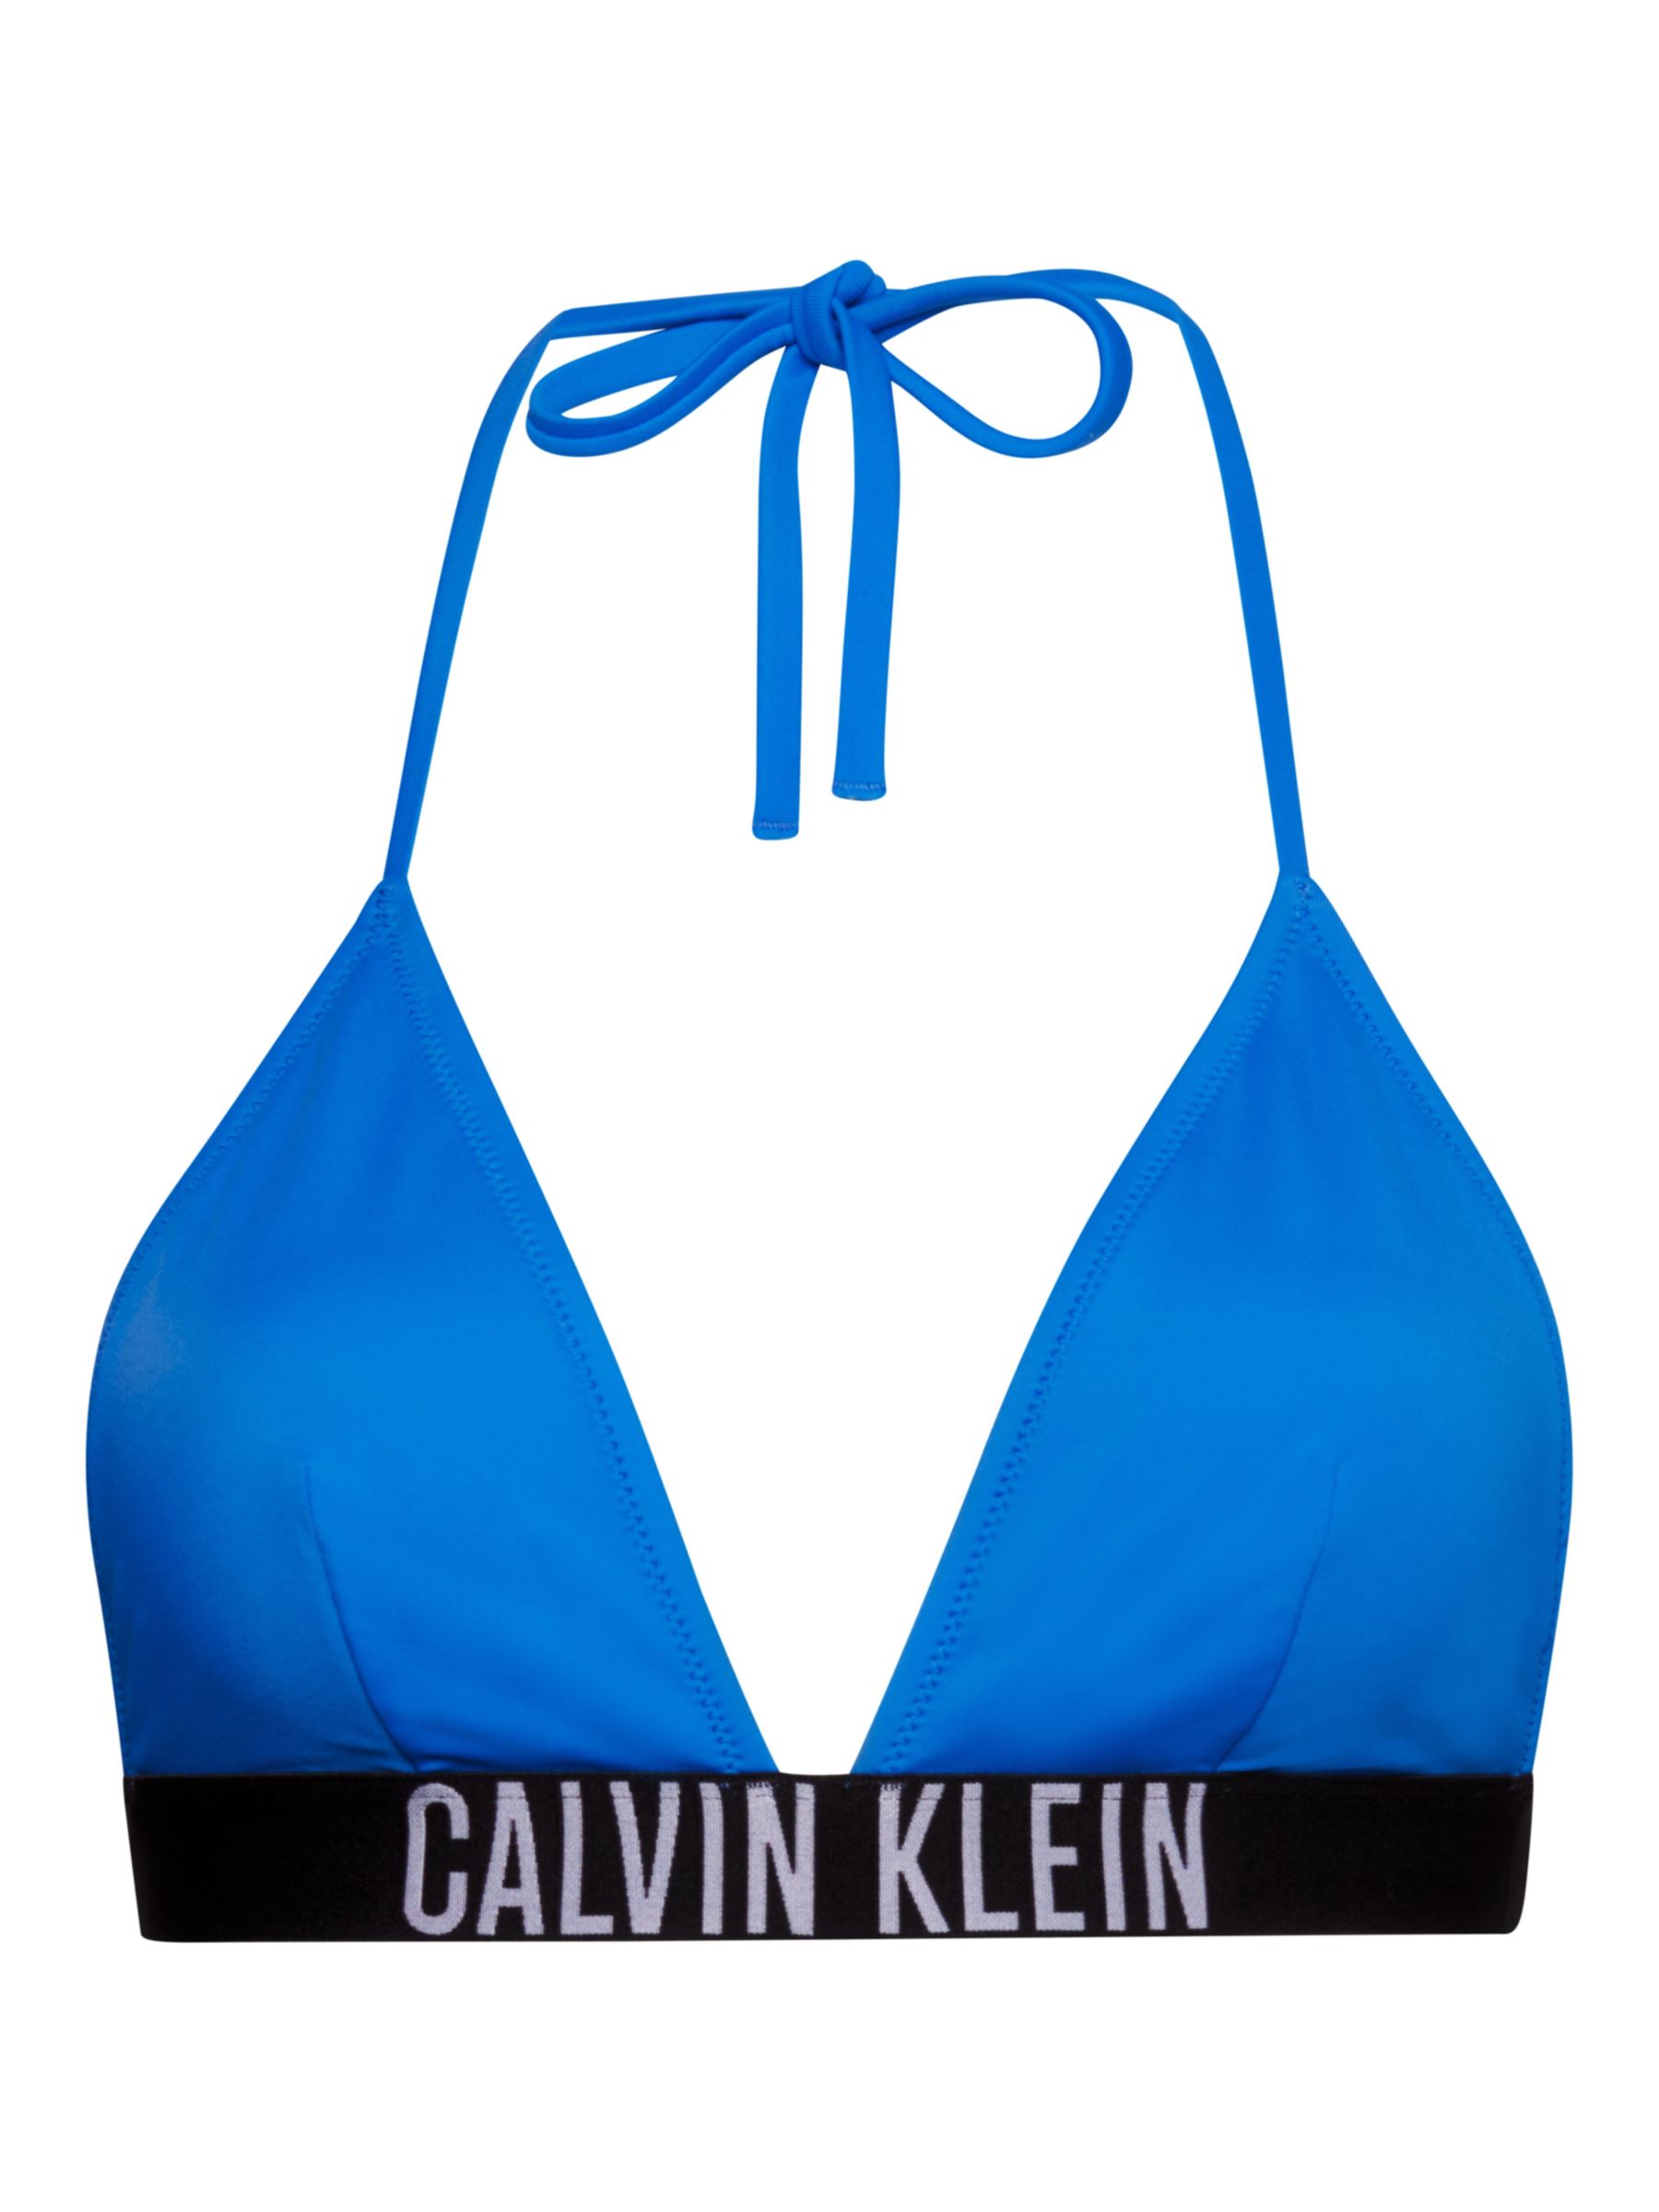 Calvin Klein Intense Power Triangle Bikini Top, Dynamic Blue, M